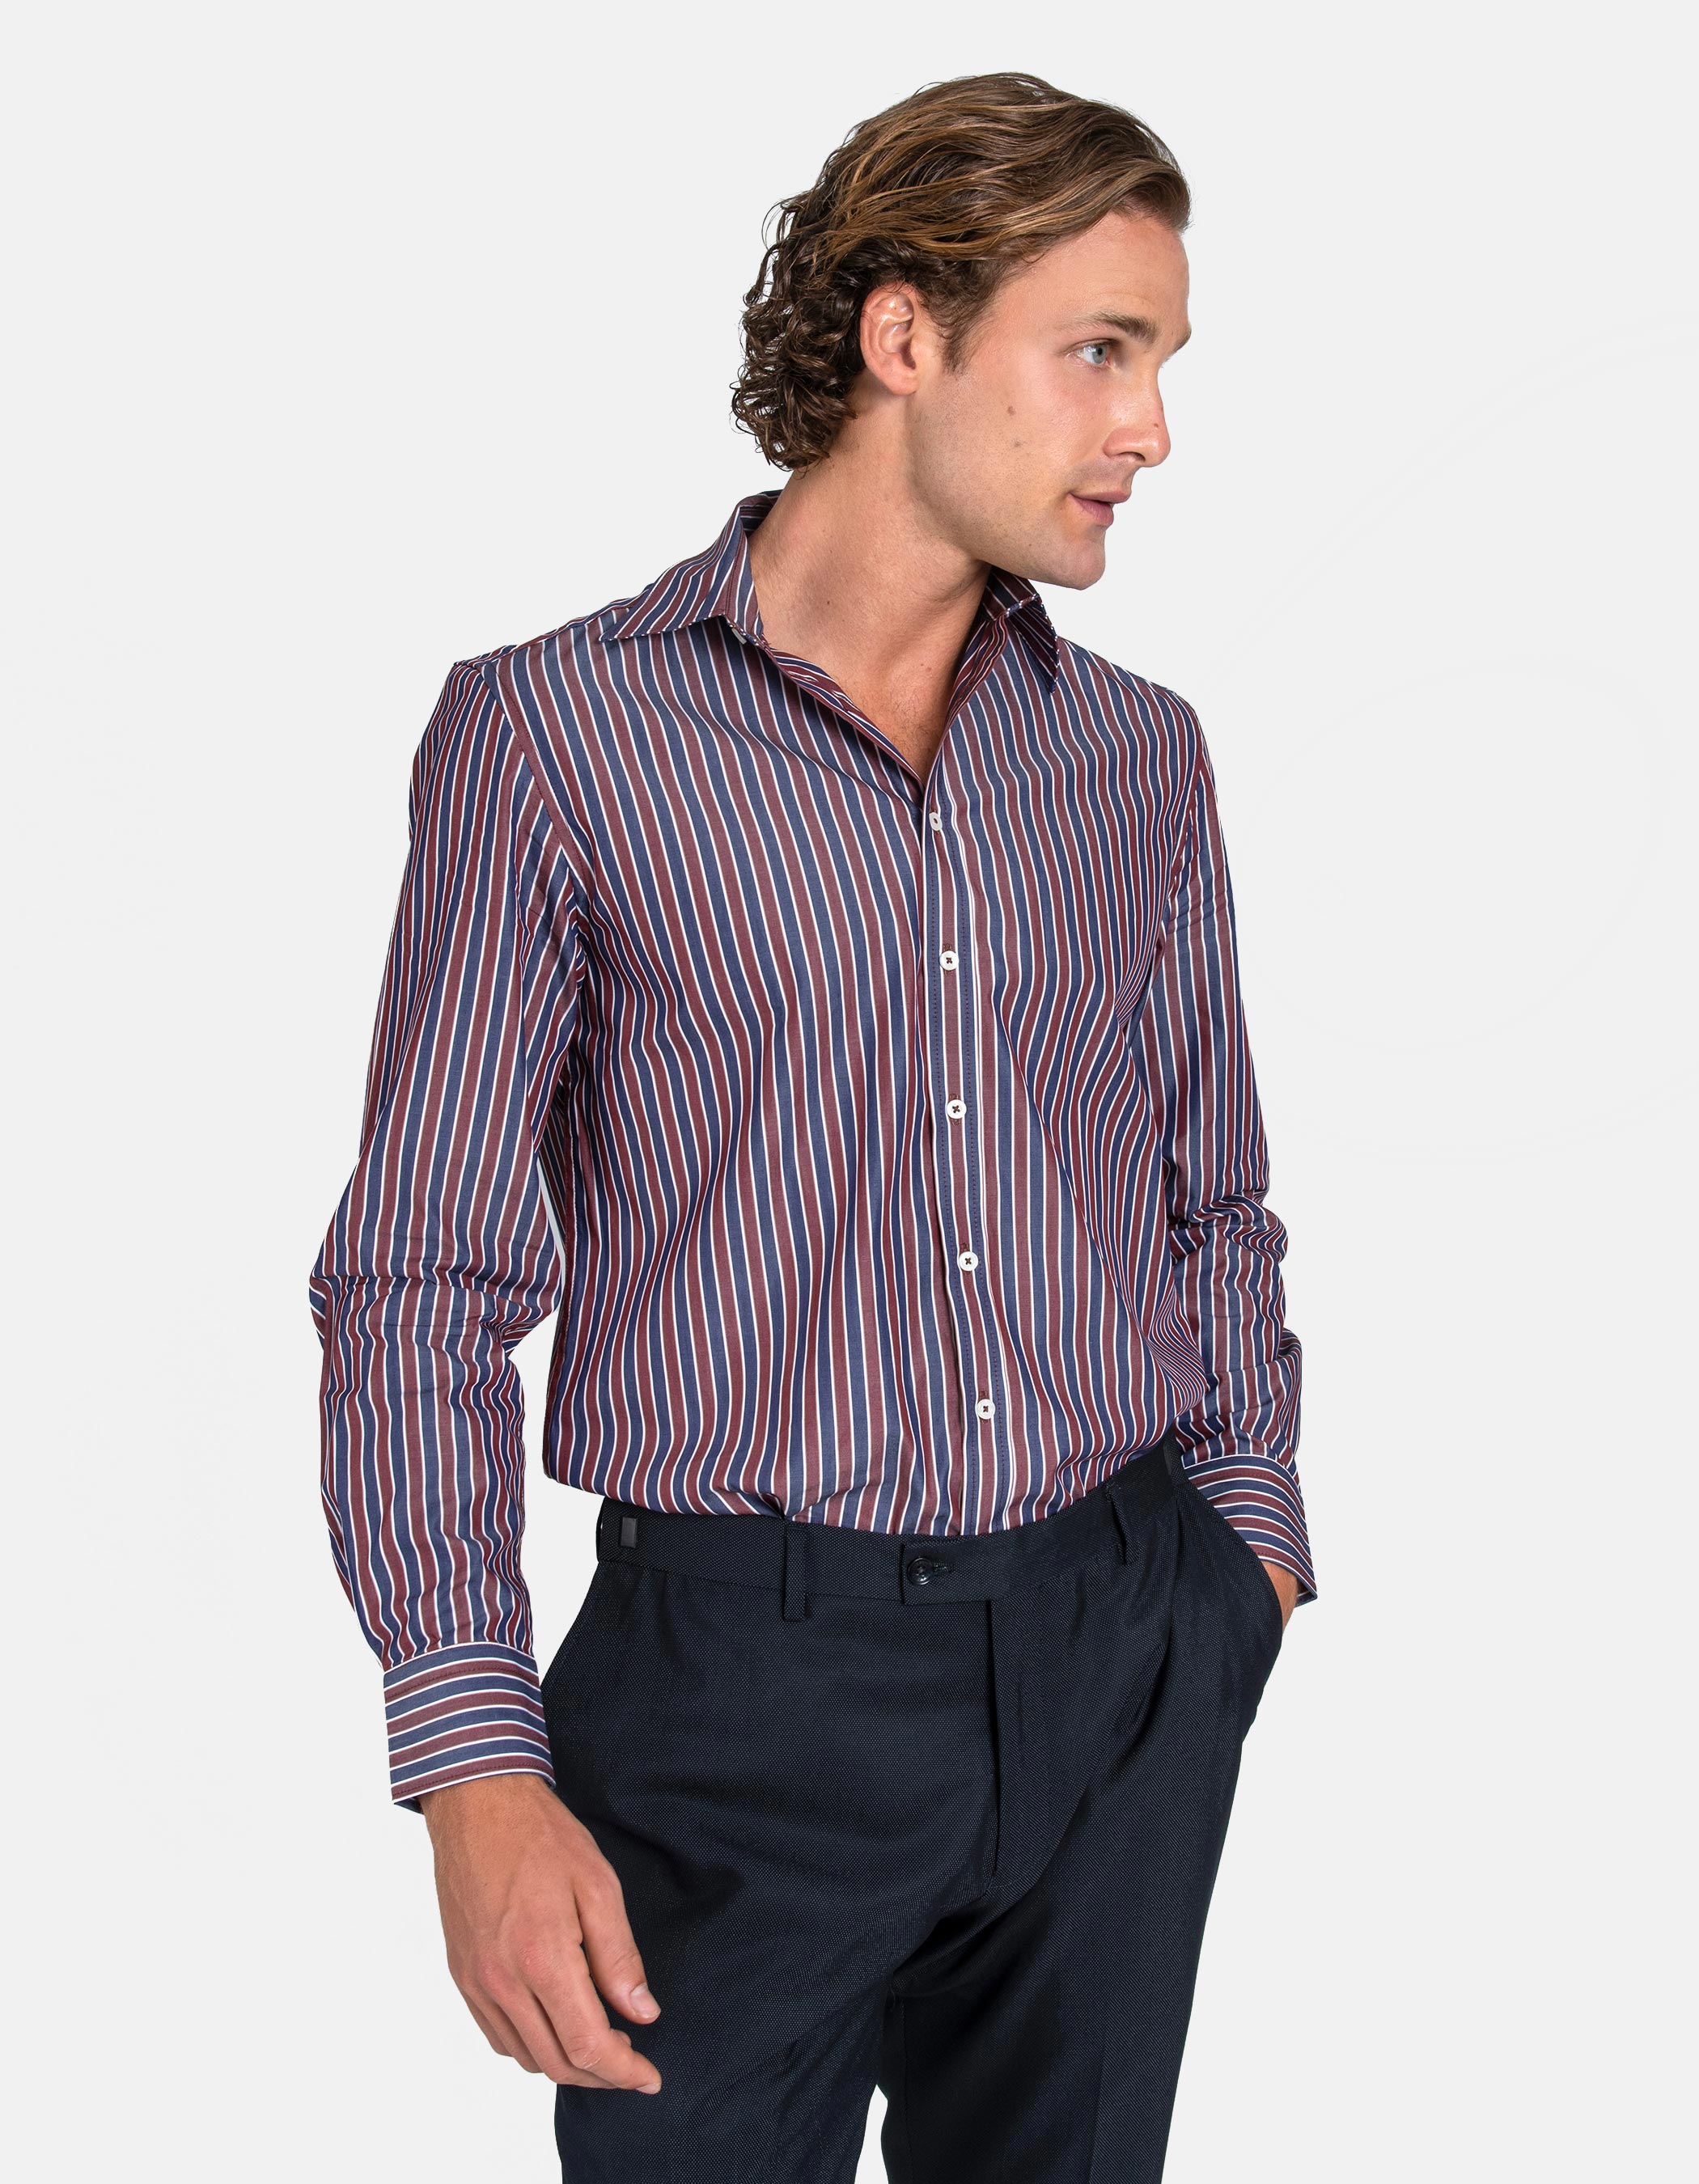 100% cotton striped shirt